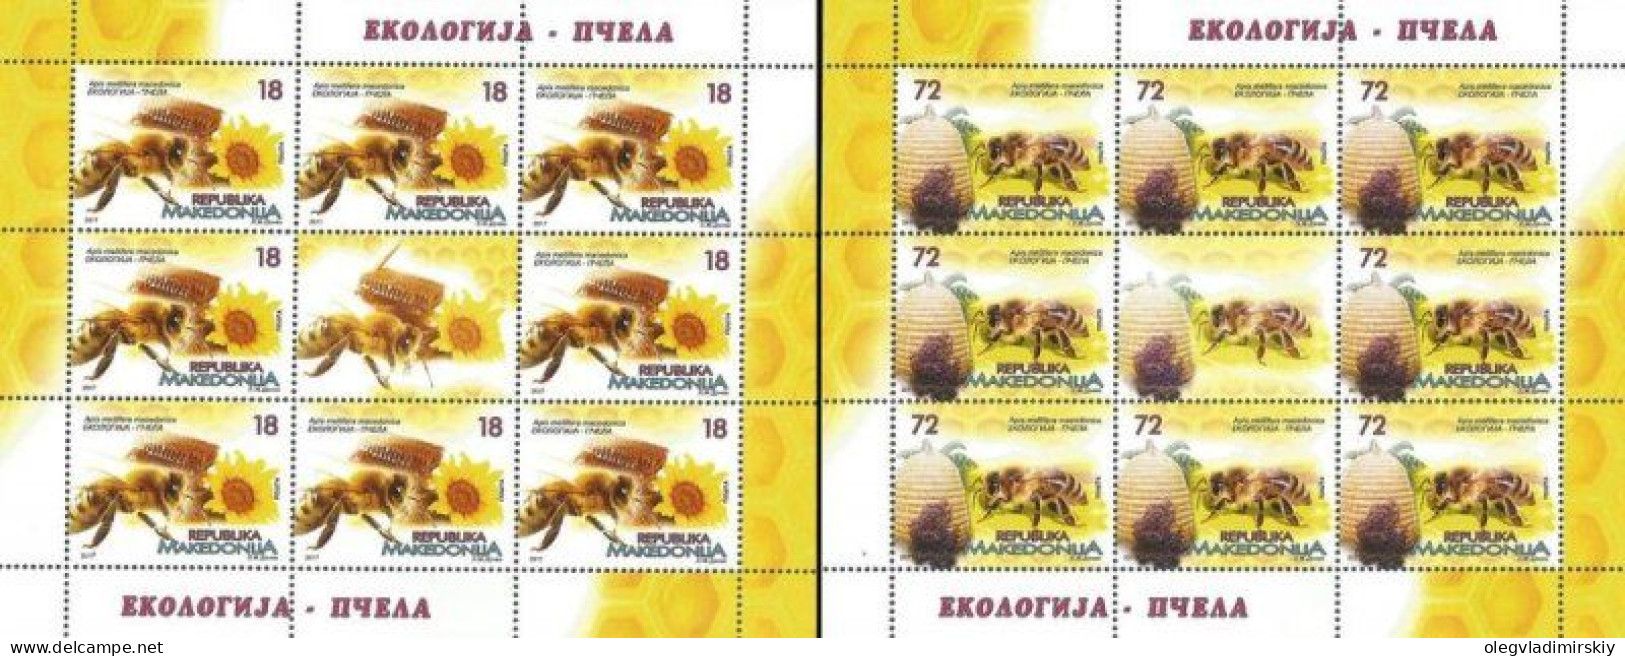 Macedonia 2017 Honey Bees Set Of 2 Sheetlets With Labels MNH - Api